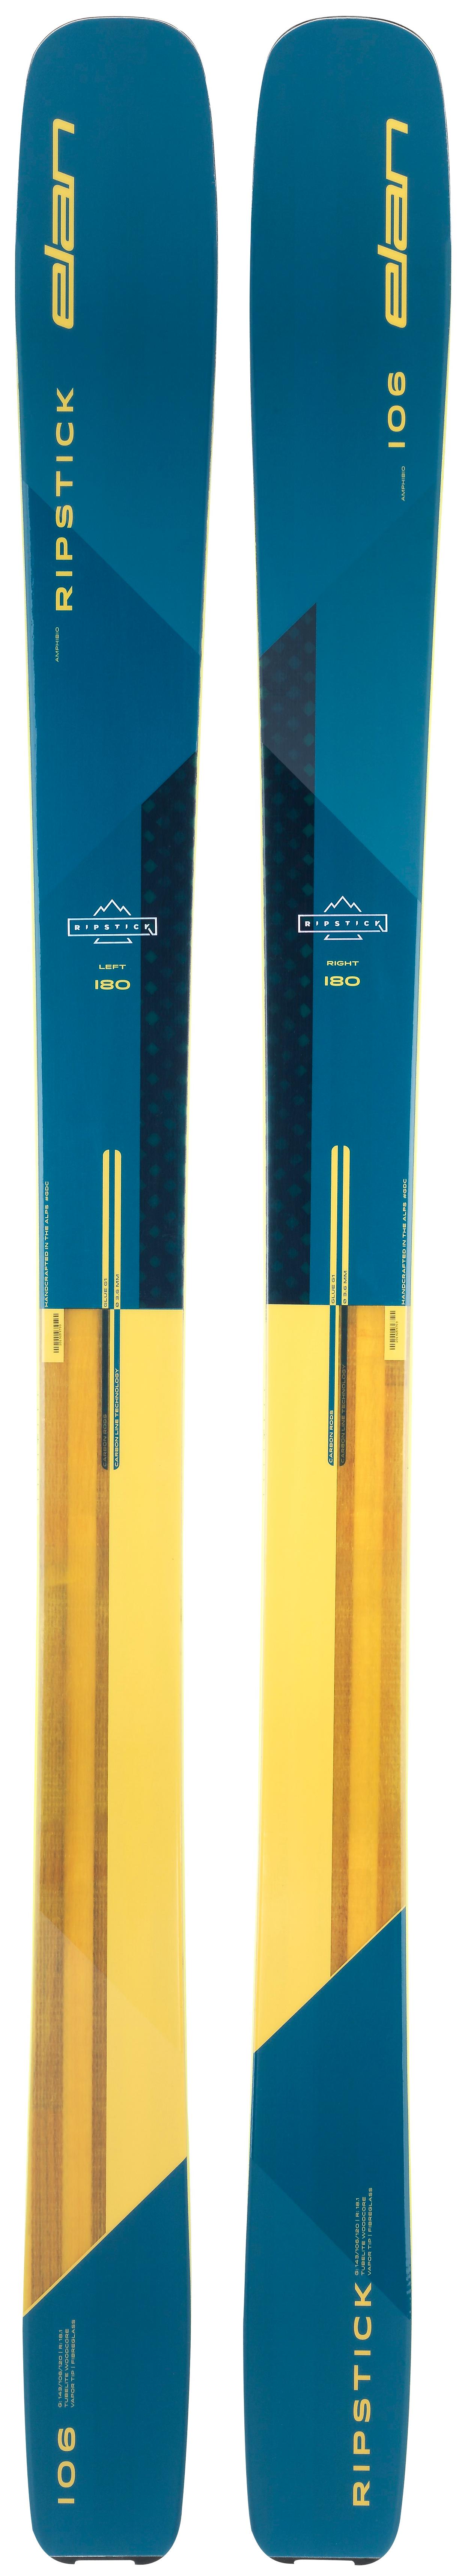 Горные лыжи Elan Ripstick 106 2021, blue/yellow, 188 см